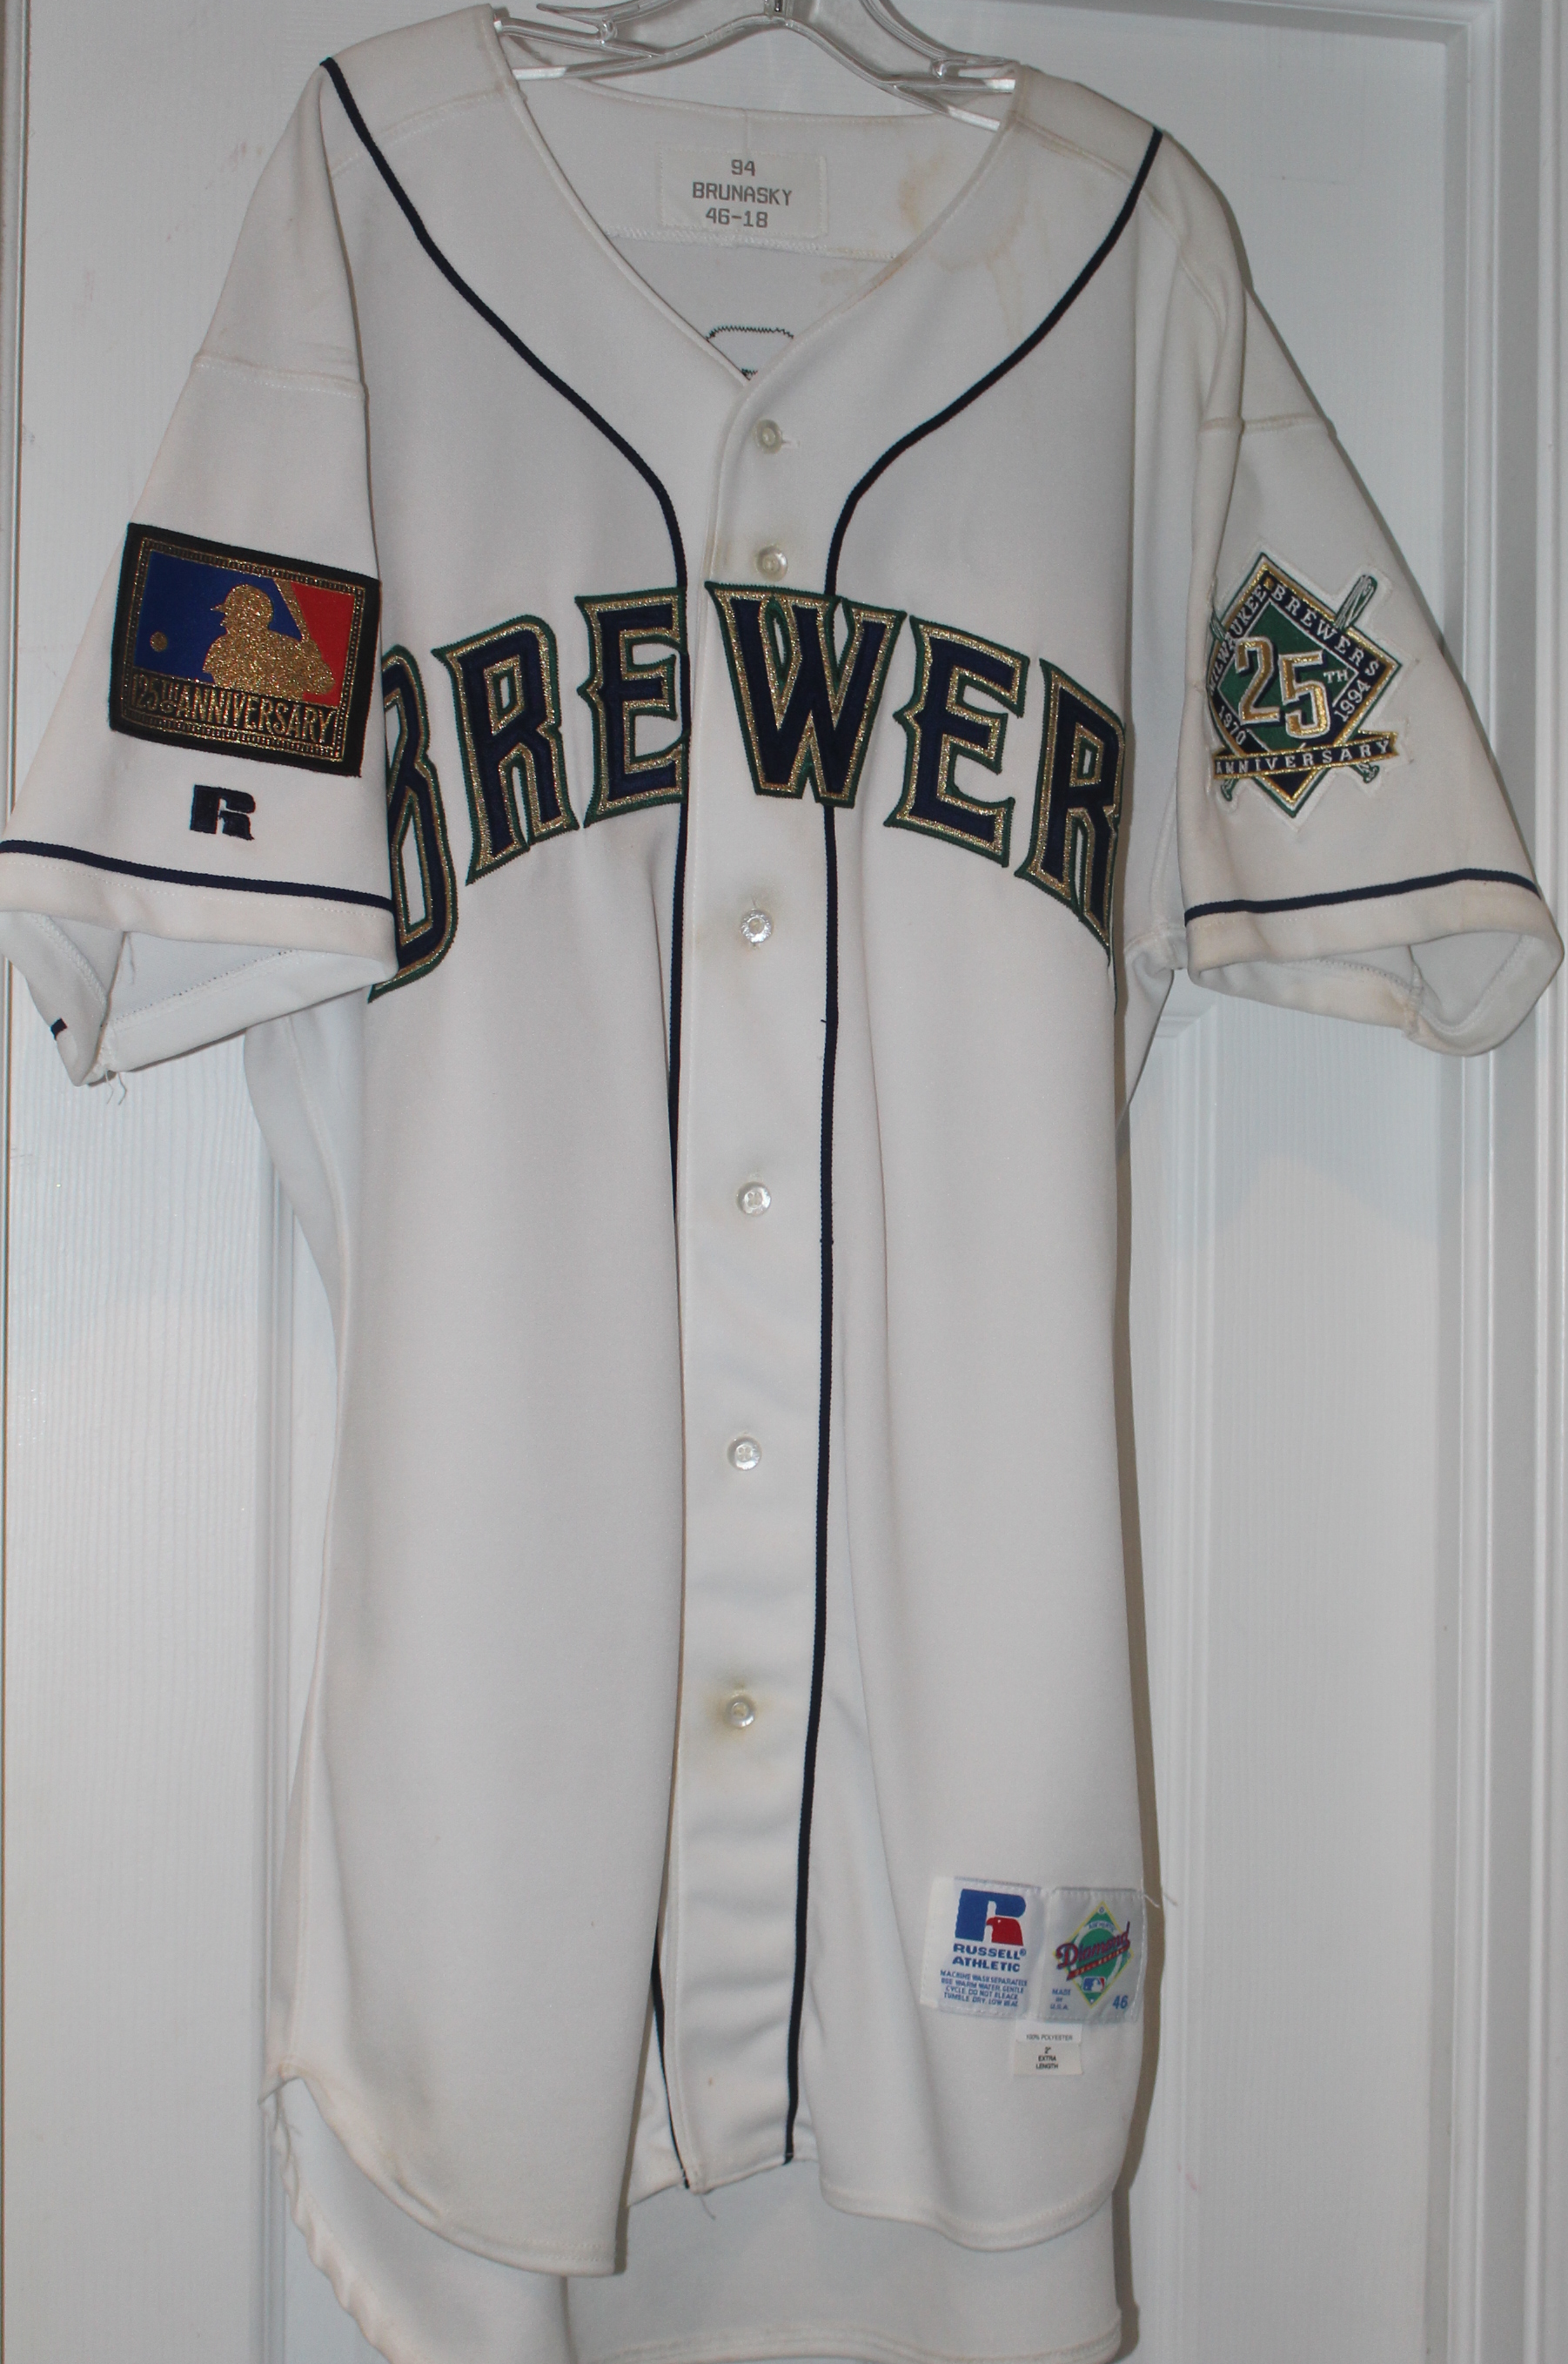 1994 Tom Brunasky Milwaukee Brewers Game Used Baseball Jersey, 2